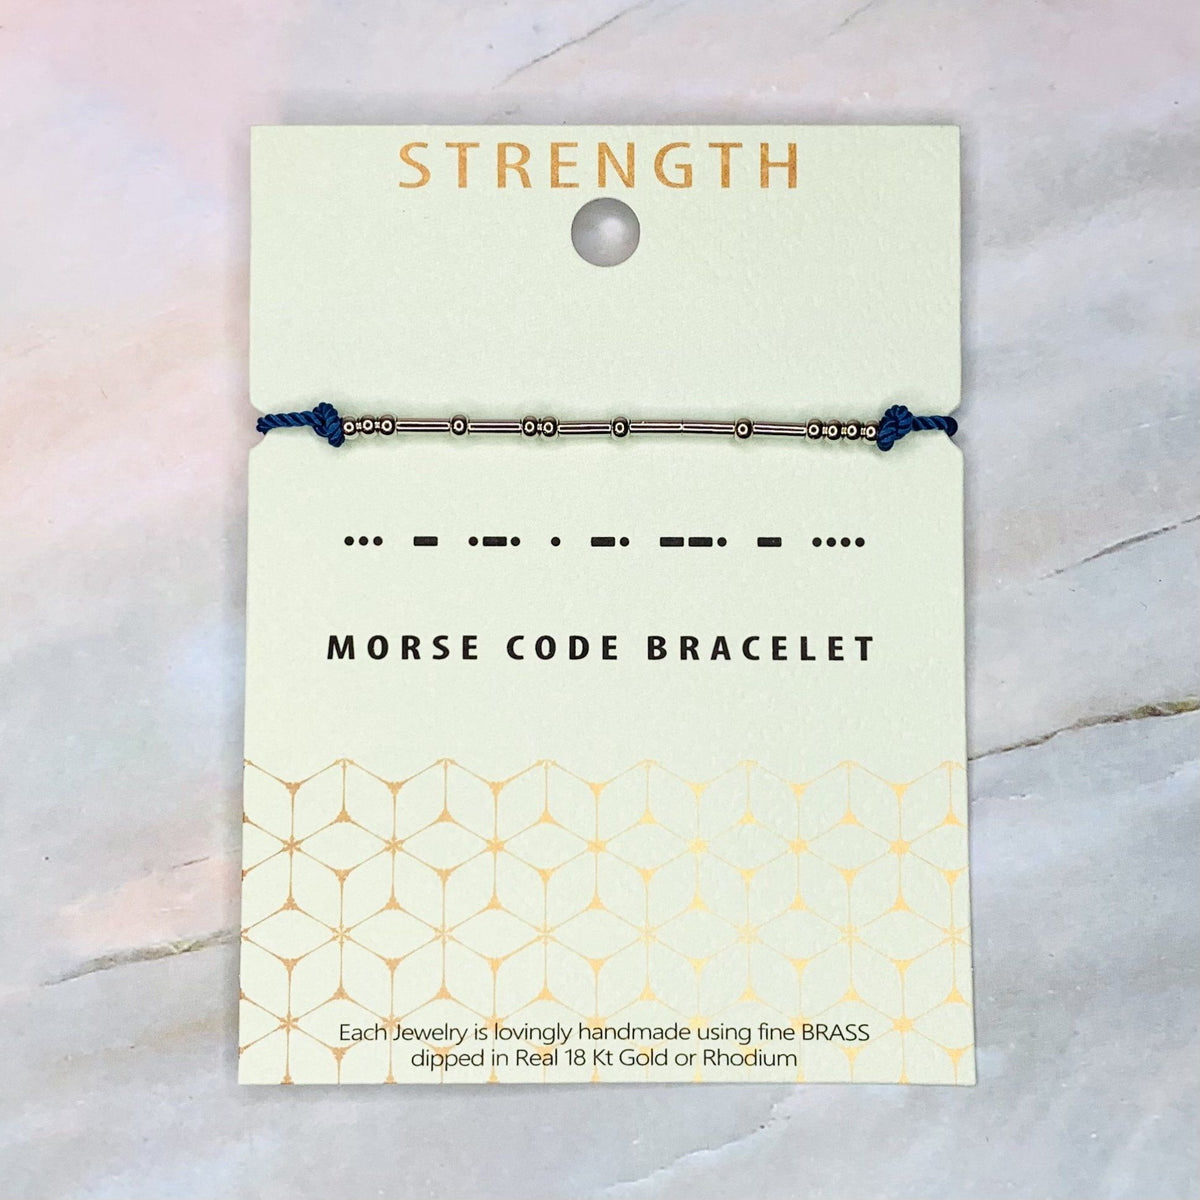 Morse Code Bracelet Jewelry Lauren-Spencer Strength 